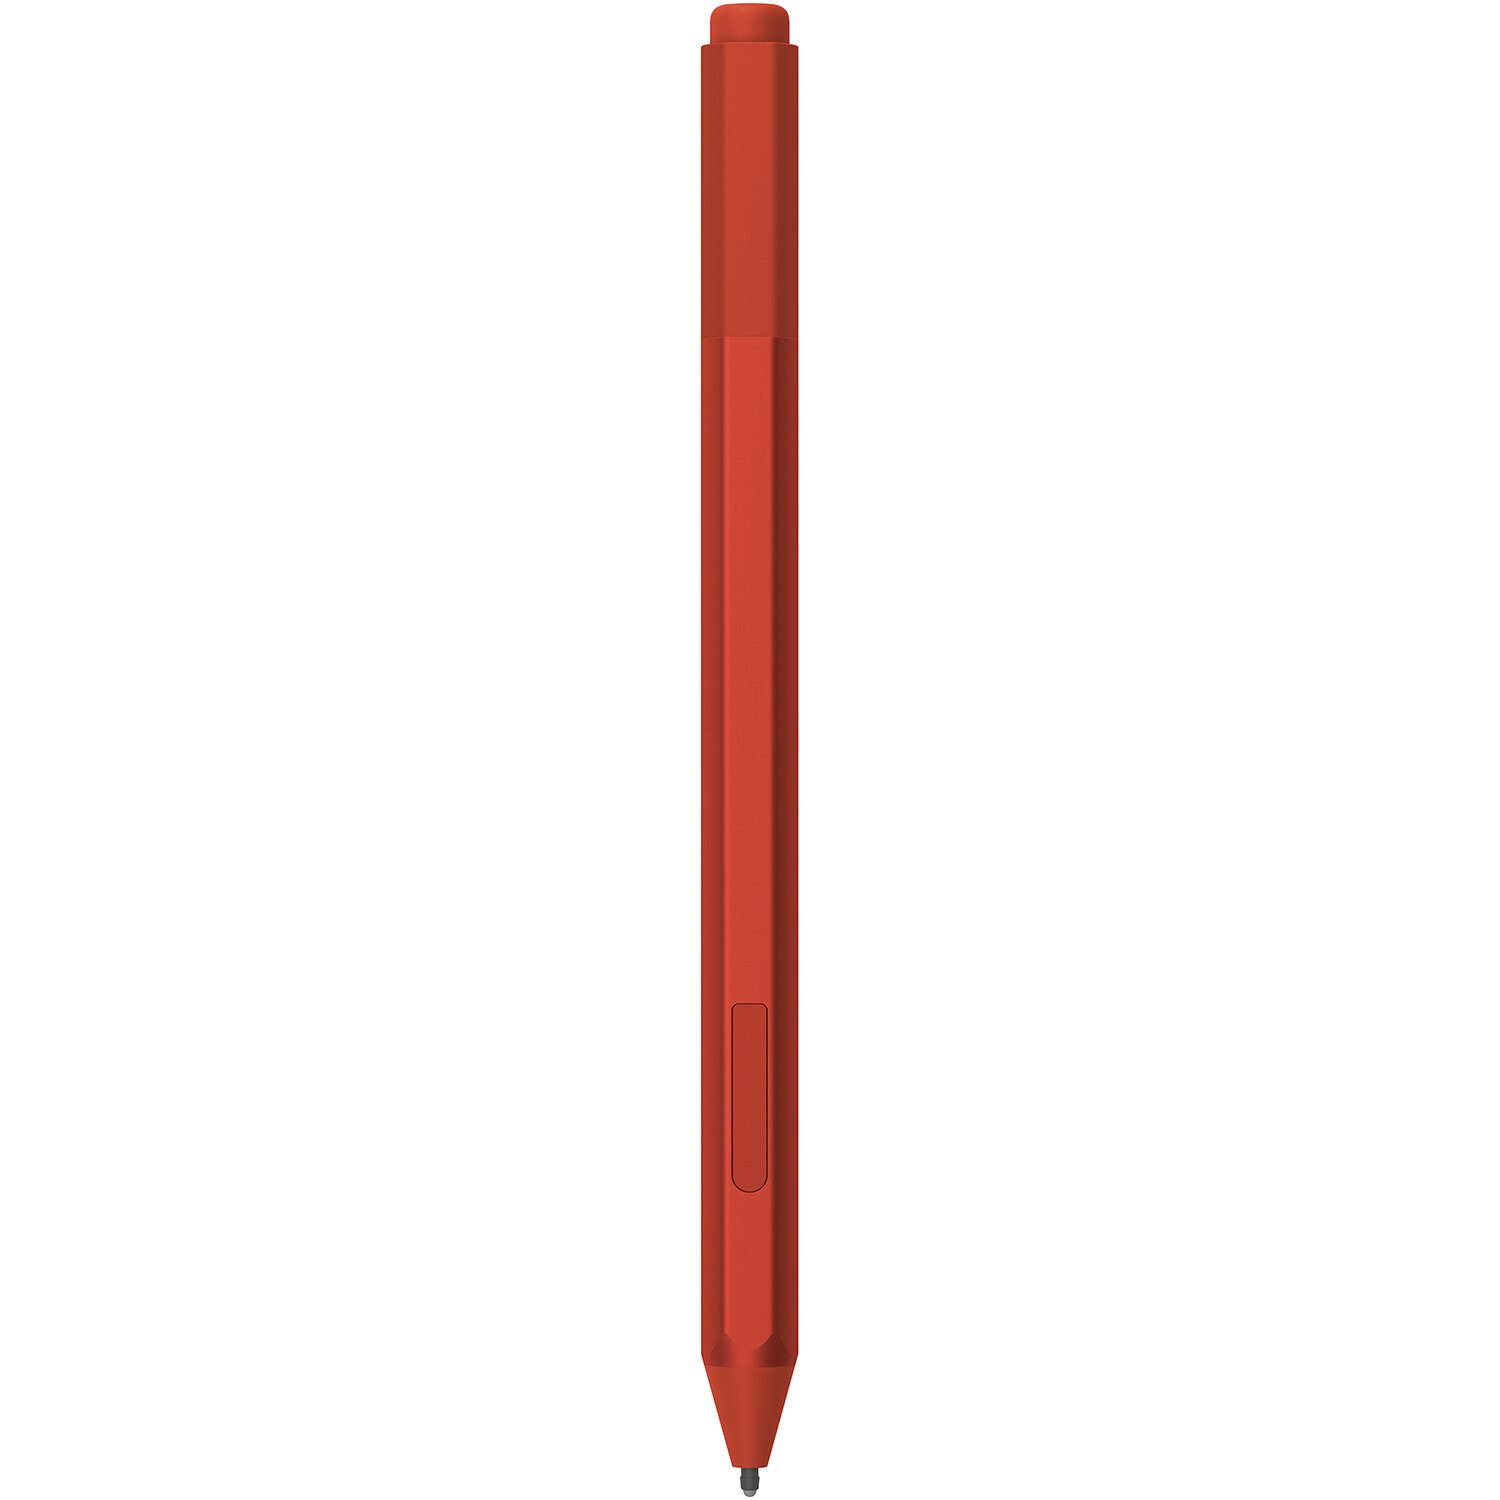 Microsoft Surface Pen V4 Stylus